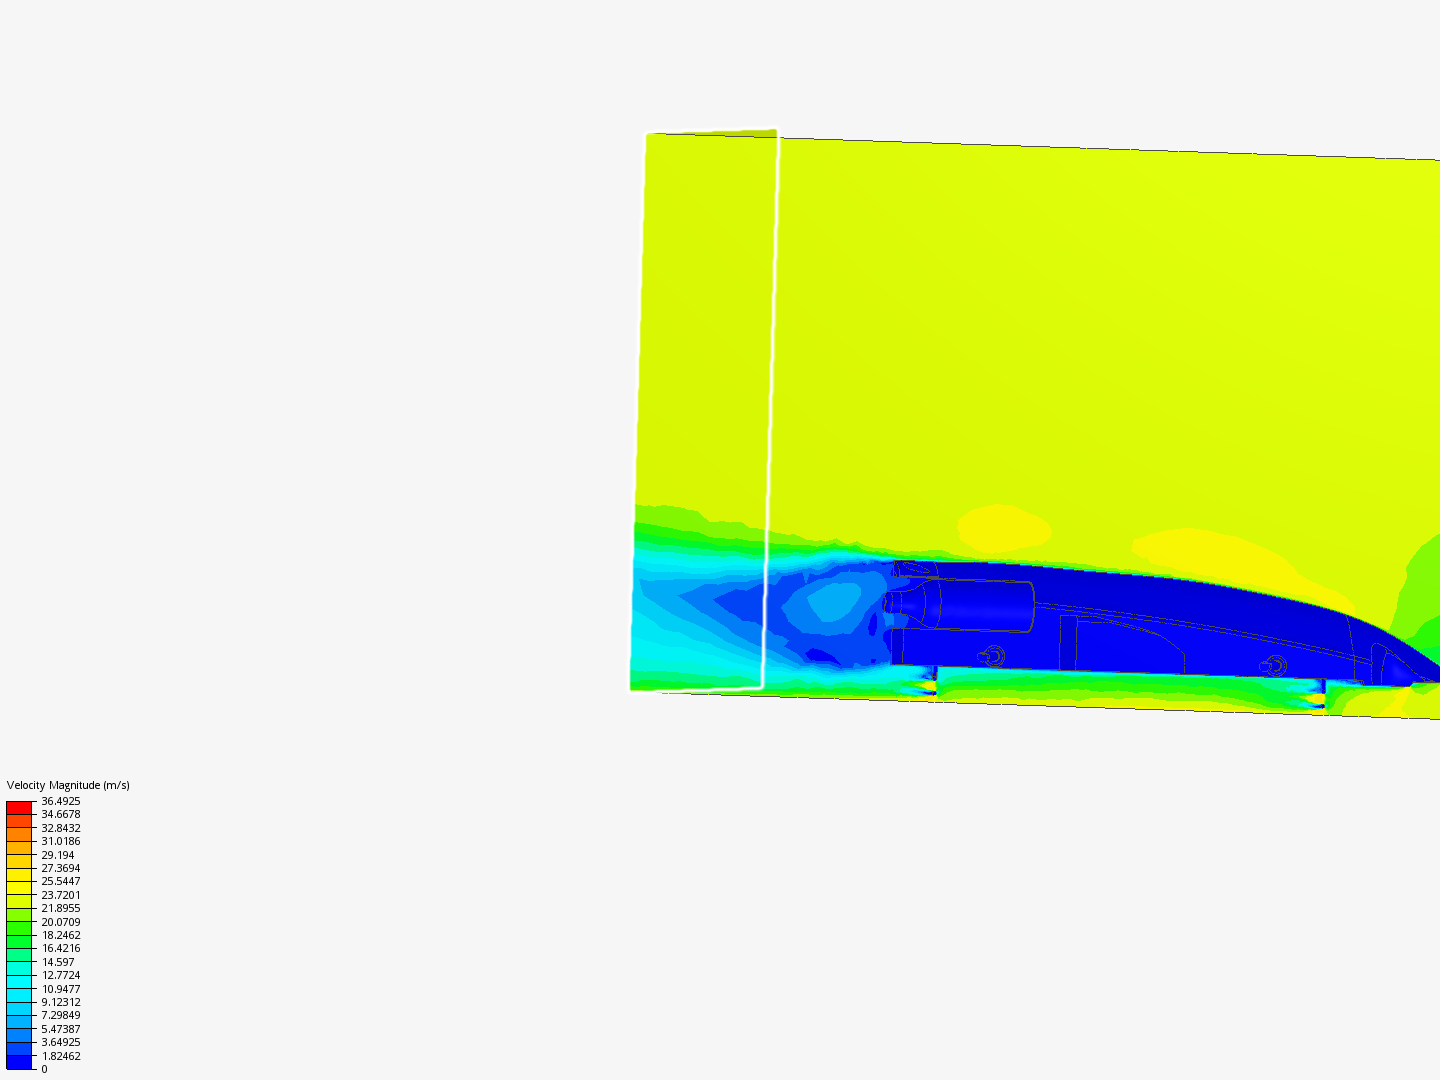 F1 Wind Tunnel Simulation - Copy image